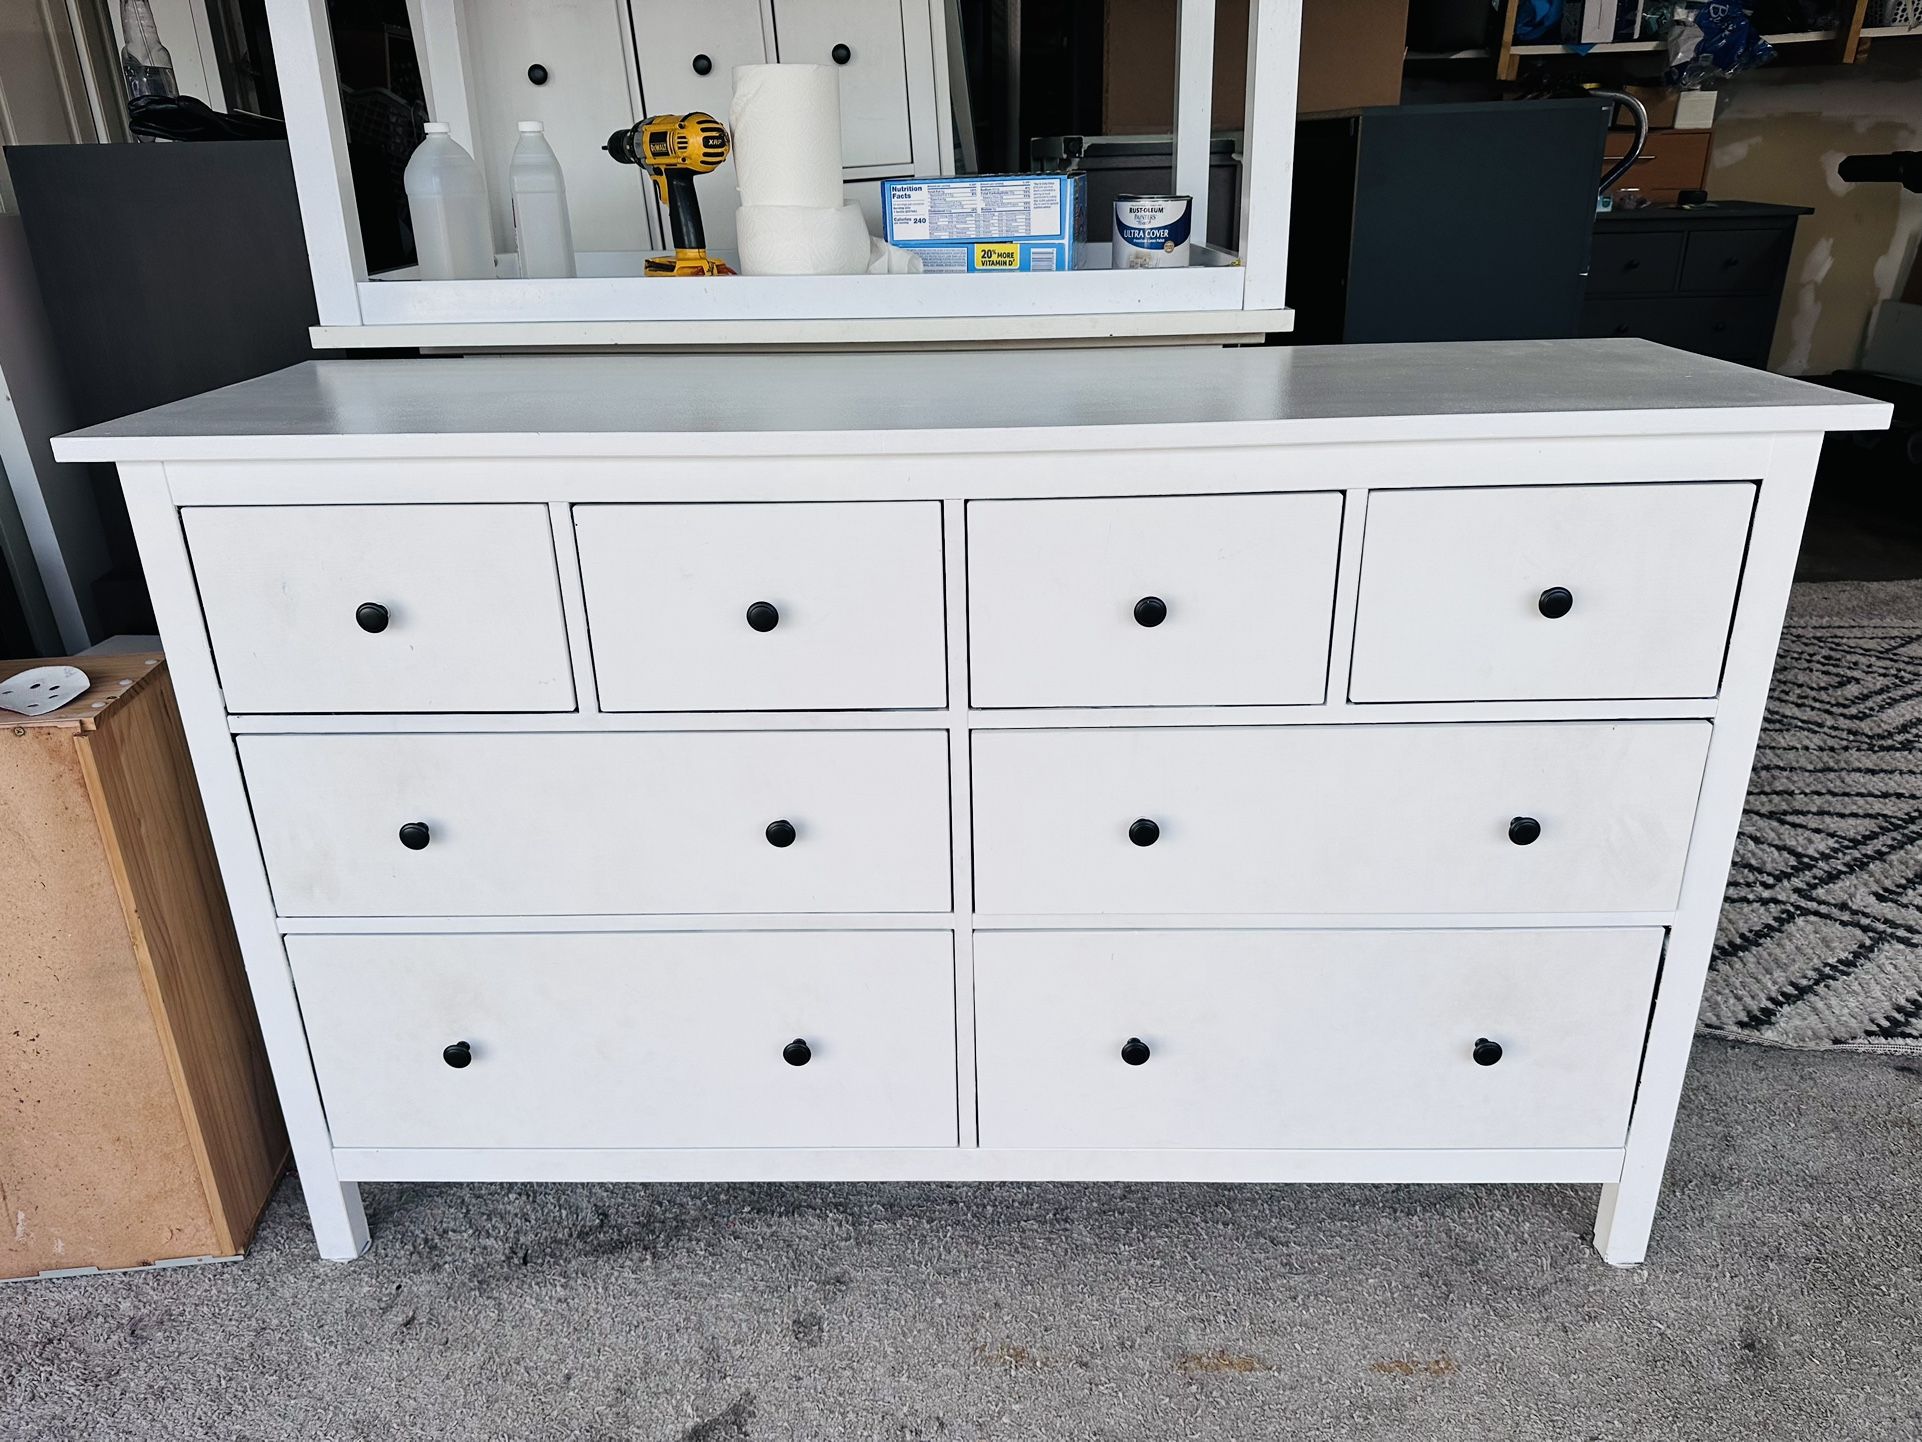 Ikea Dresser Painted White